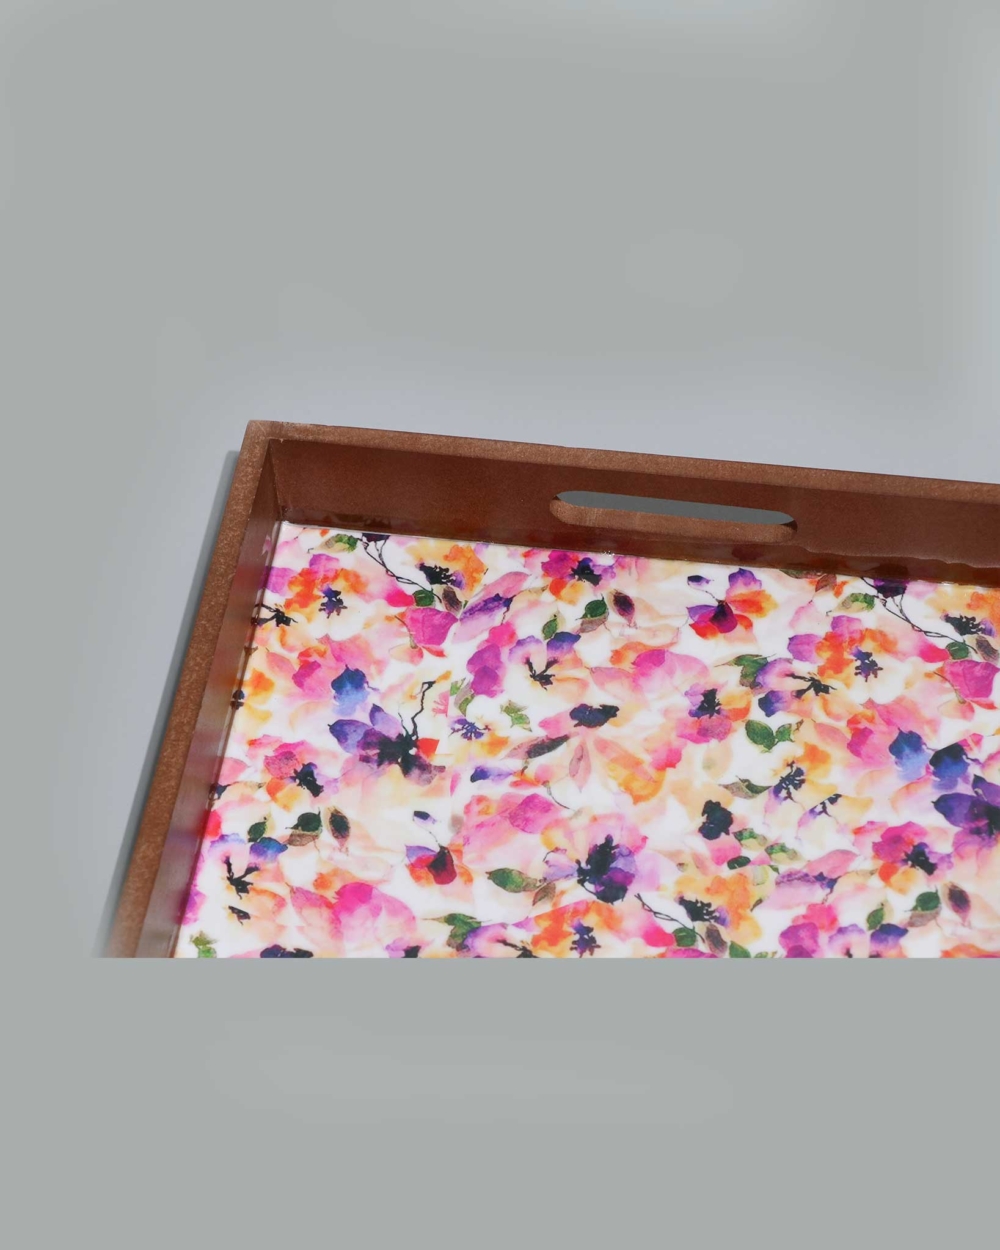 Rajouri printed wooden tray